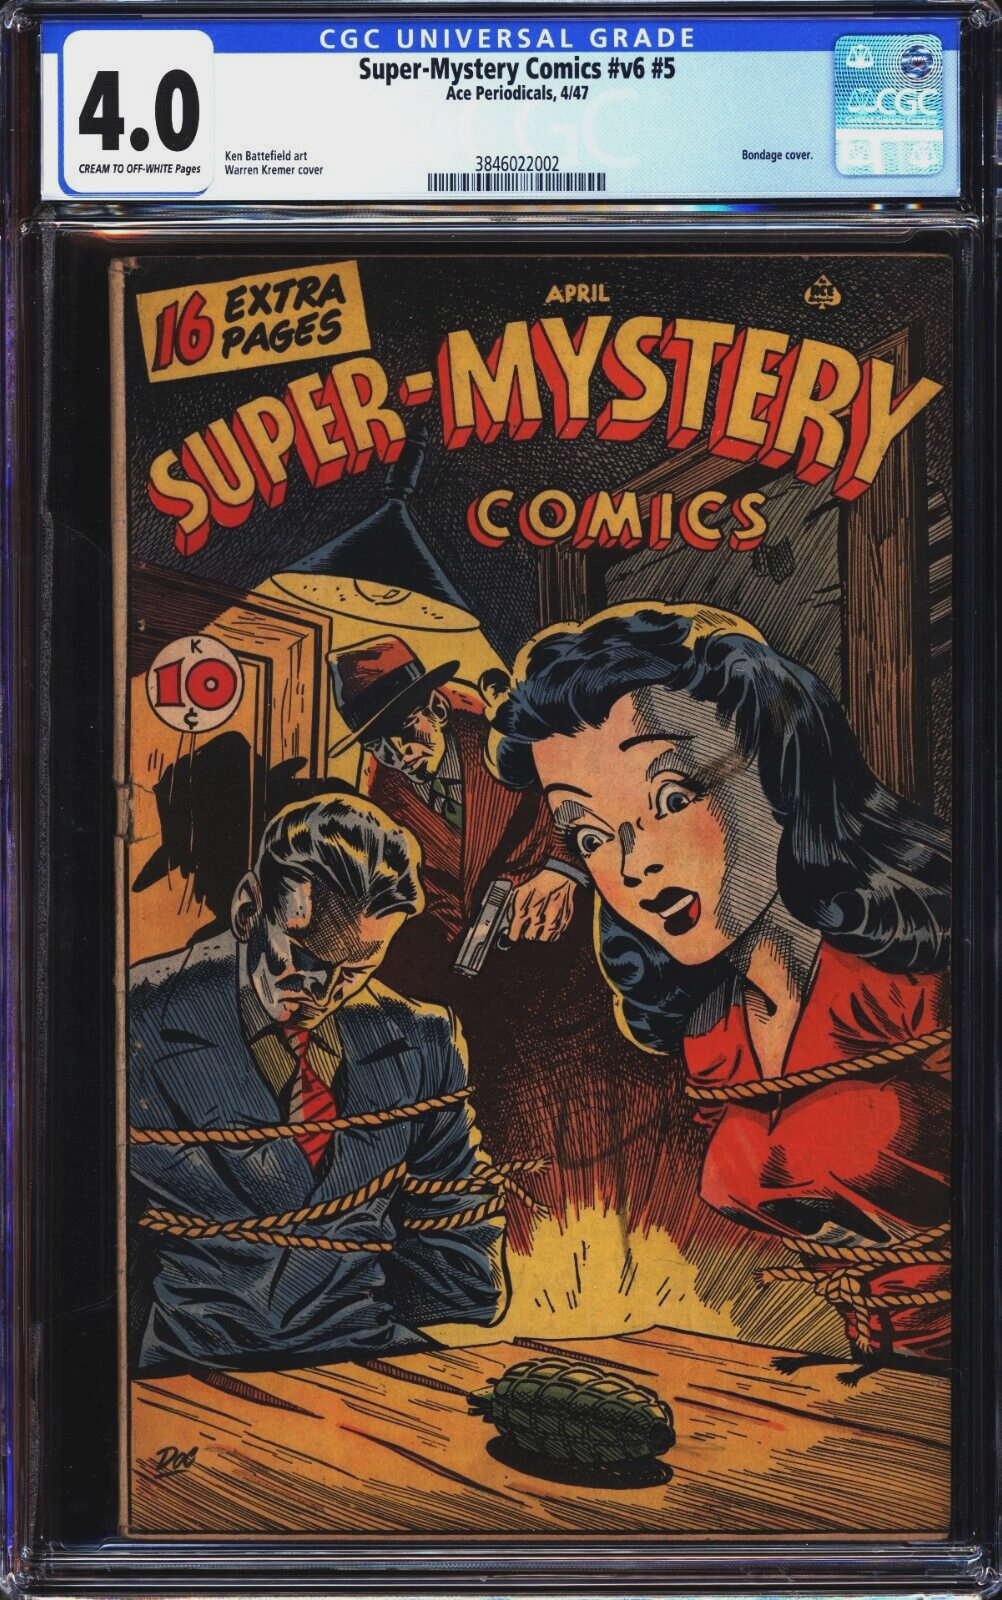 SuperMystery Comics Volume 6 5 CGC 40 Classic Bondage cover 1947 Ace